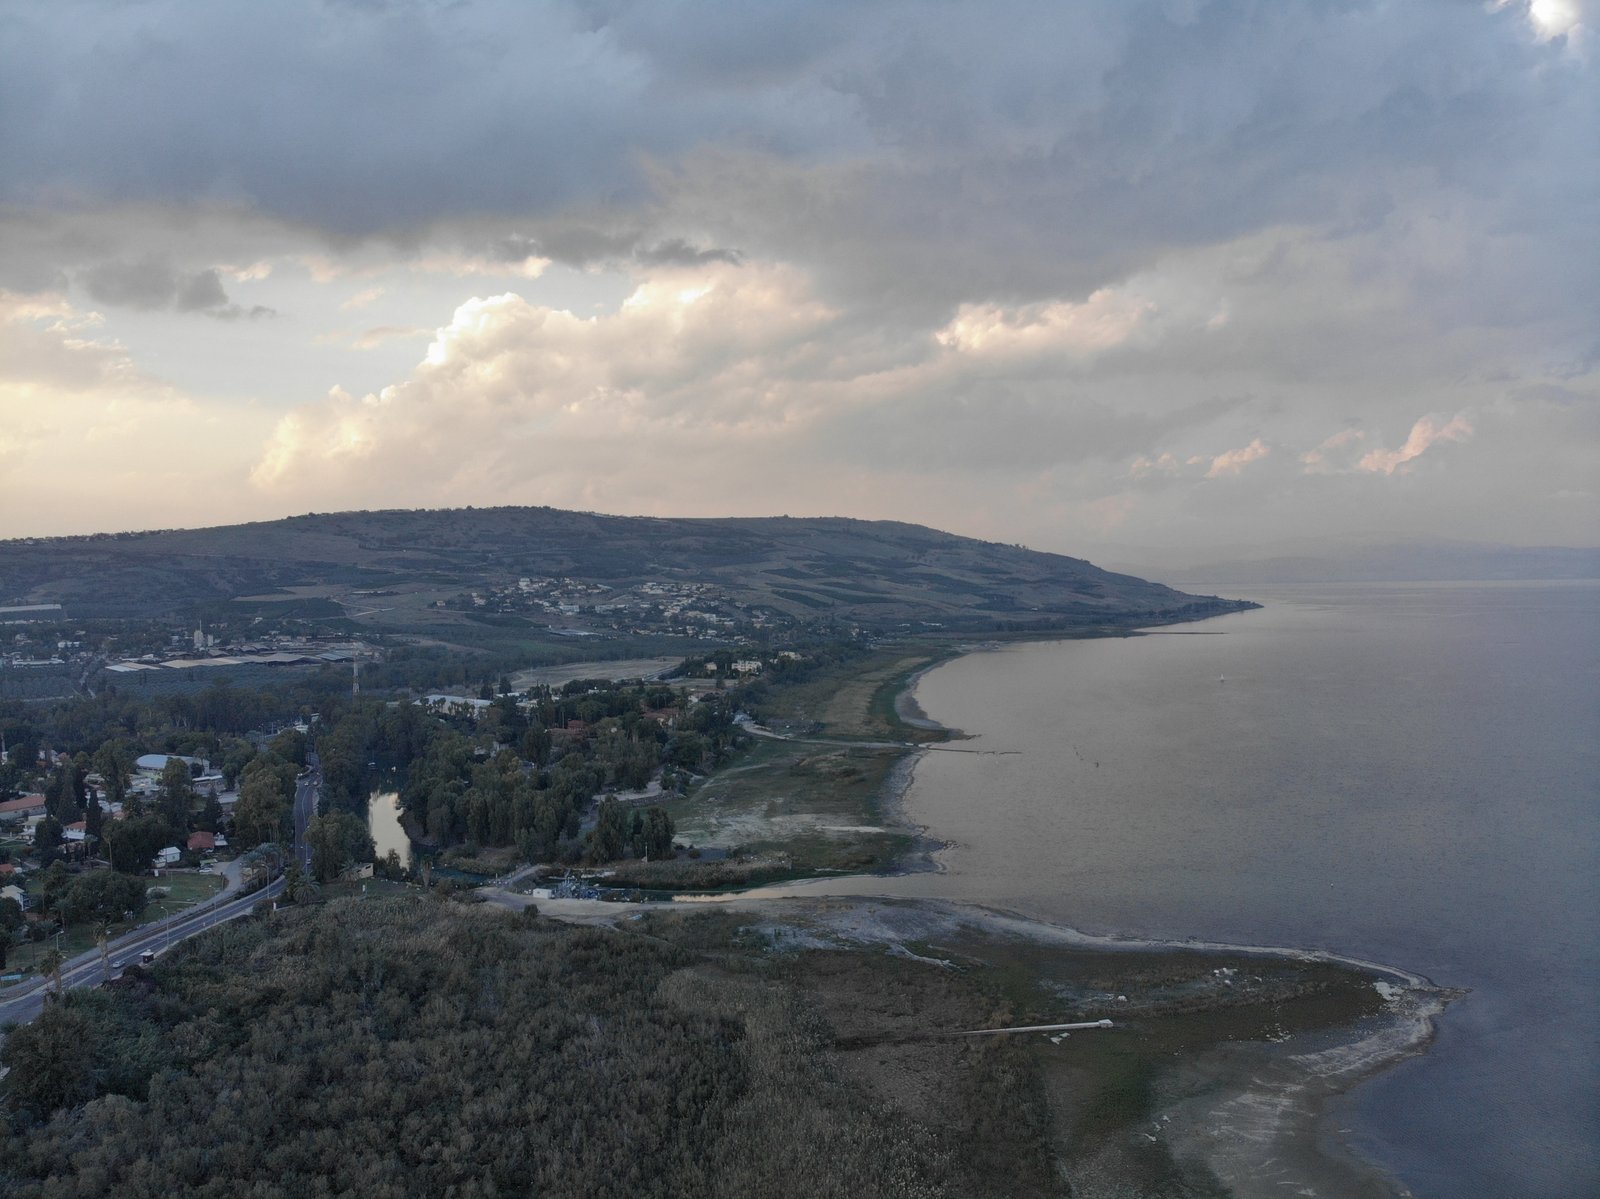 Sea of Galilee and Jordan River